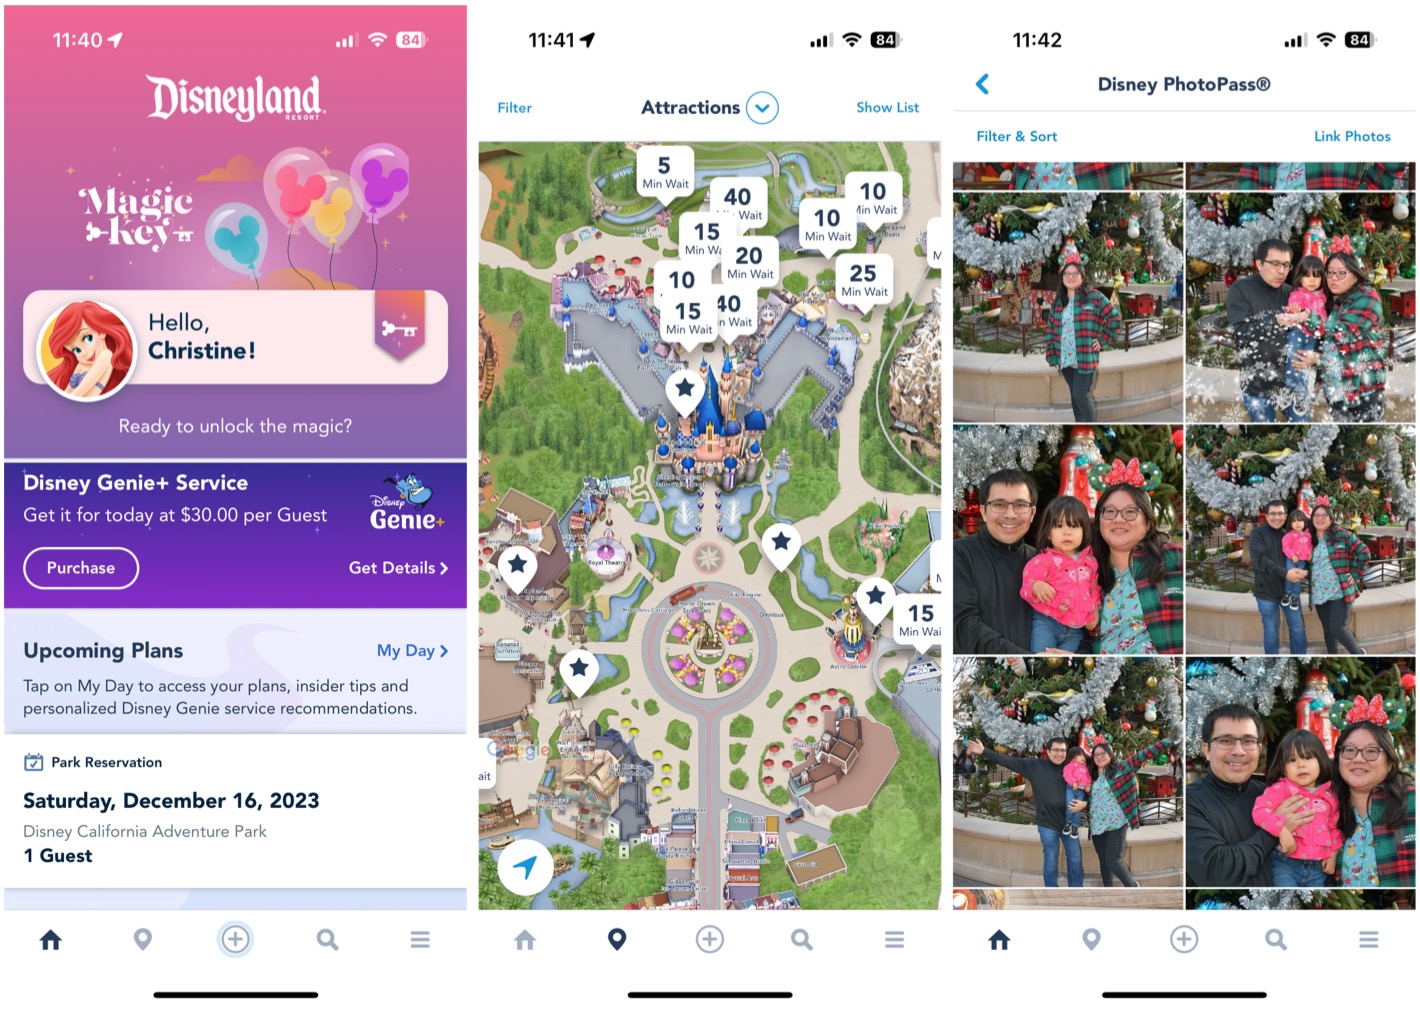 Screenshots of the Disneyland app on iPhone.